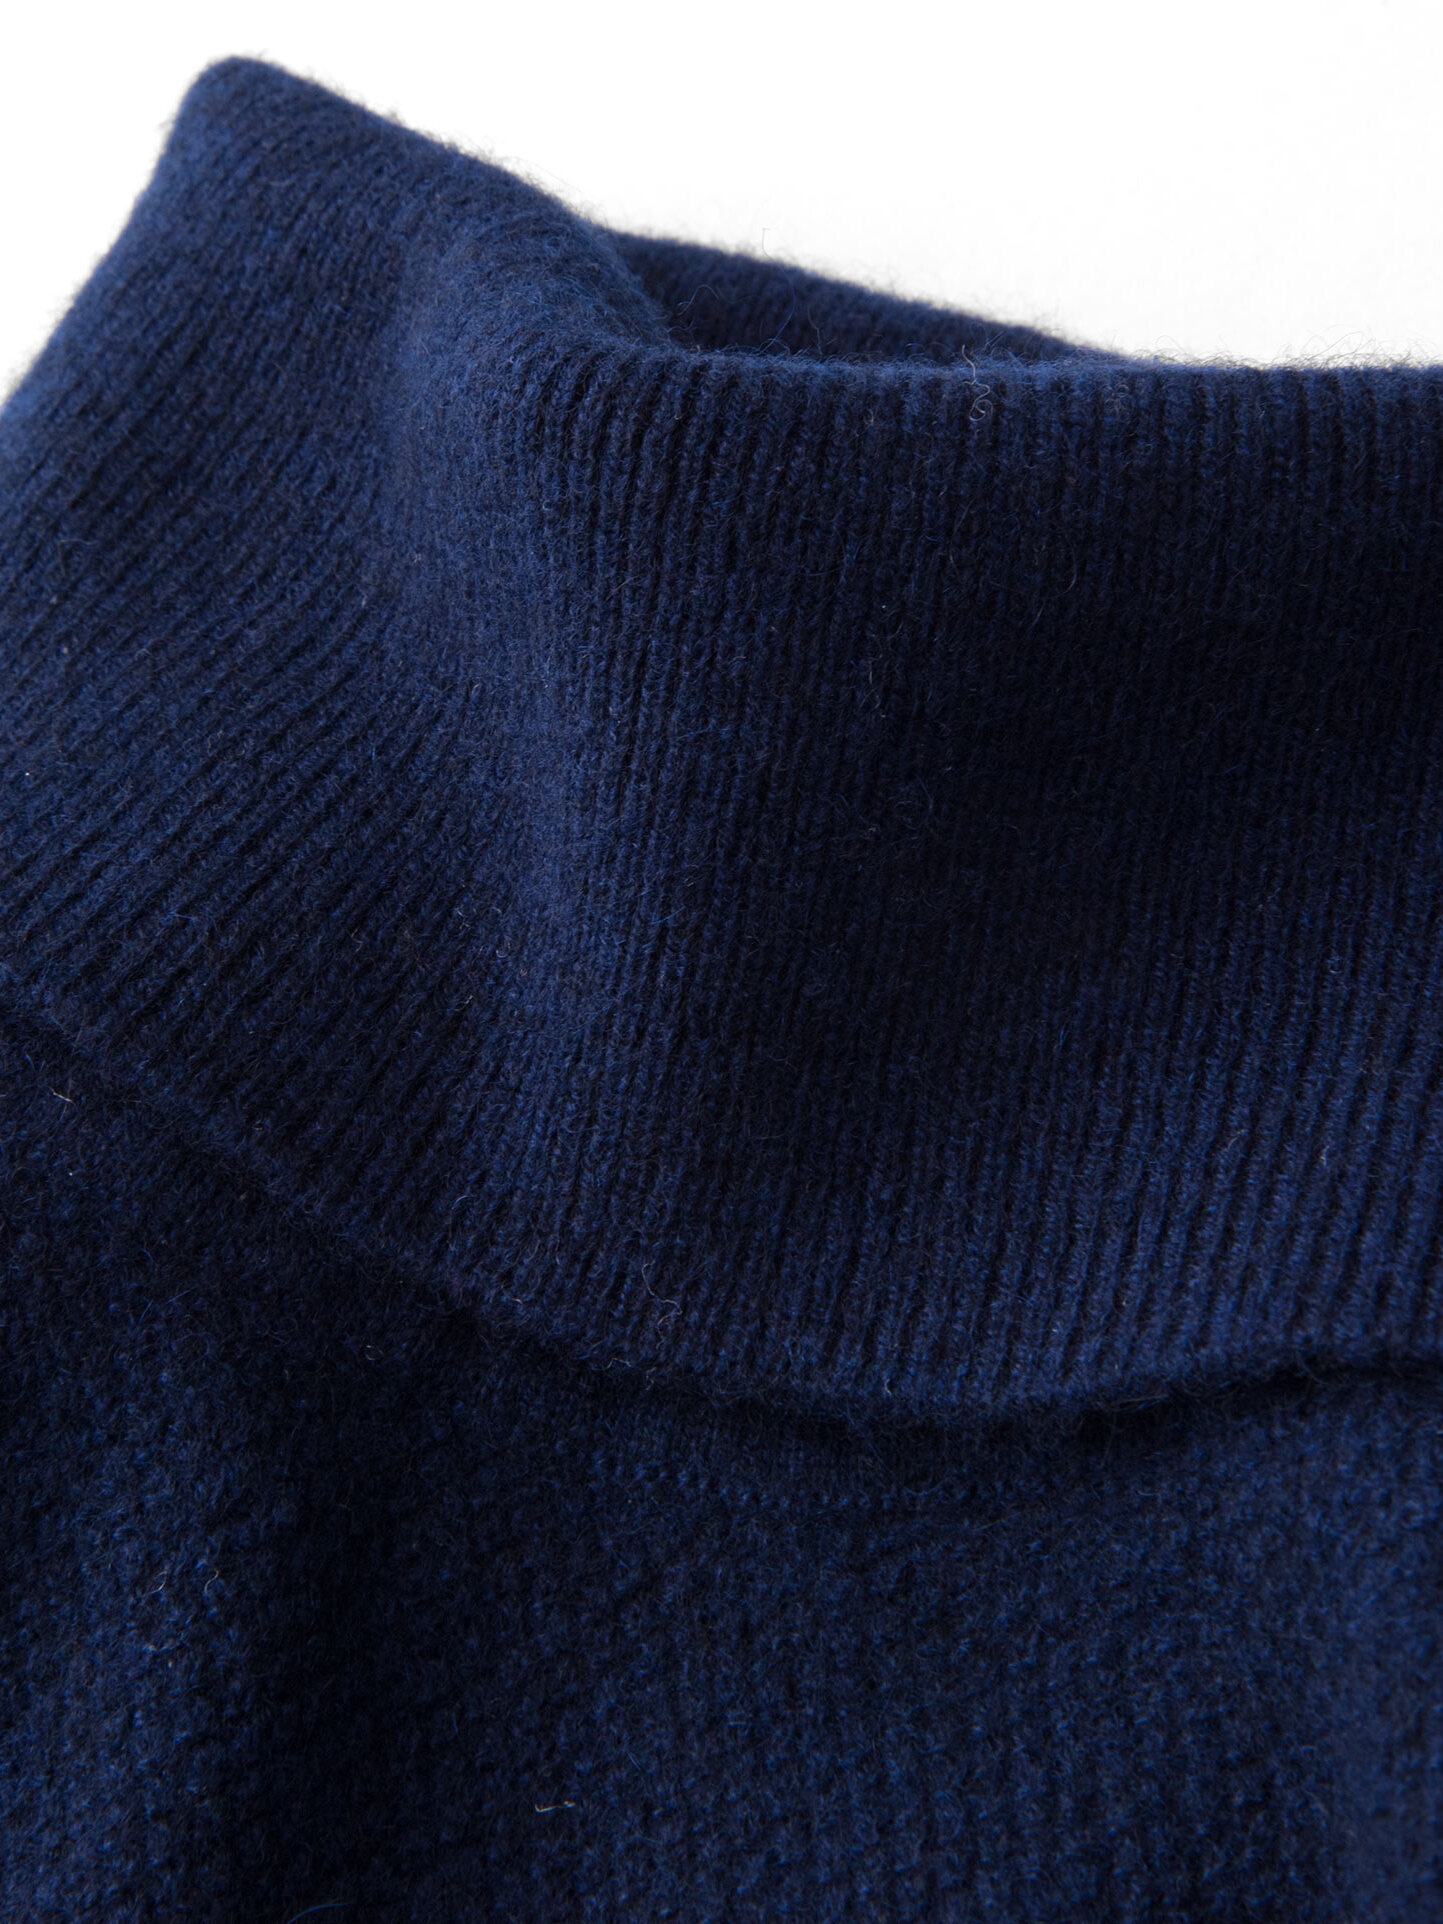 Navy Cobble Stitch Cashmere Turtleneck Sweater by Proper Cloth